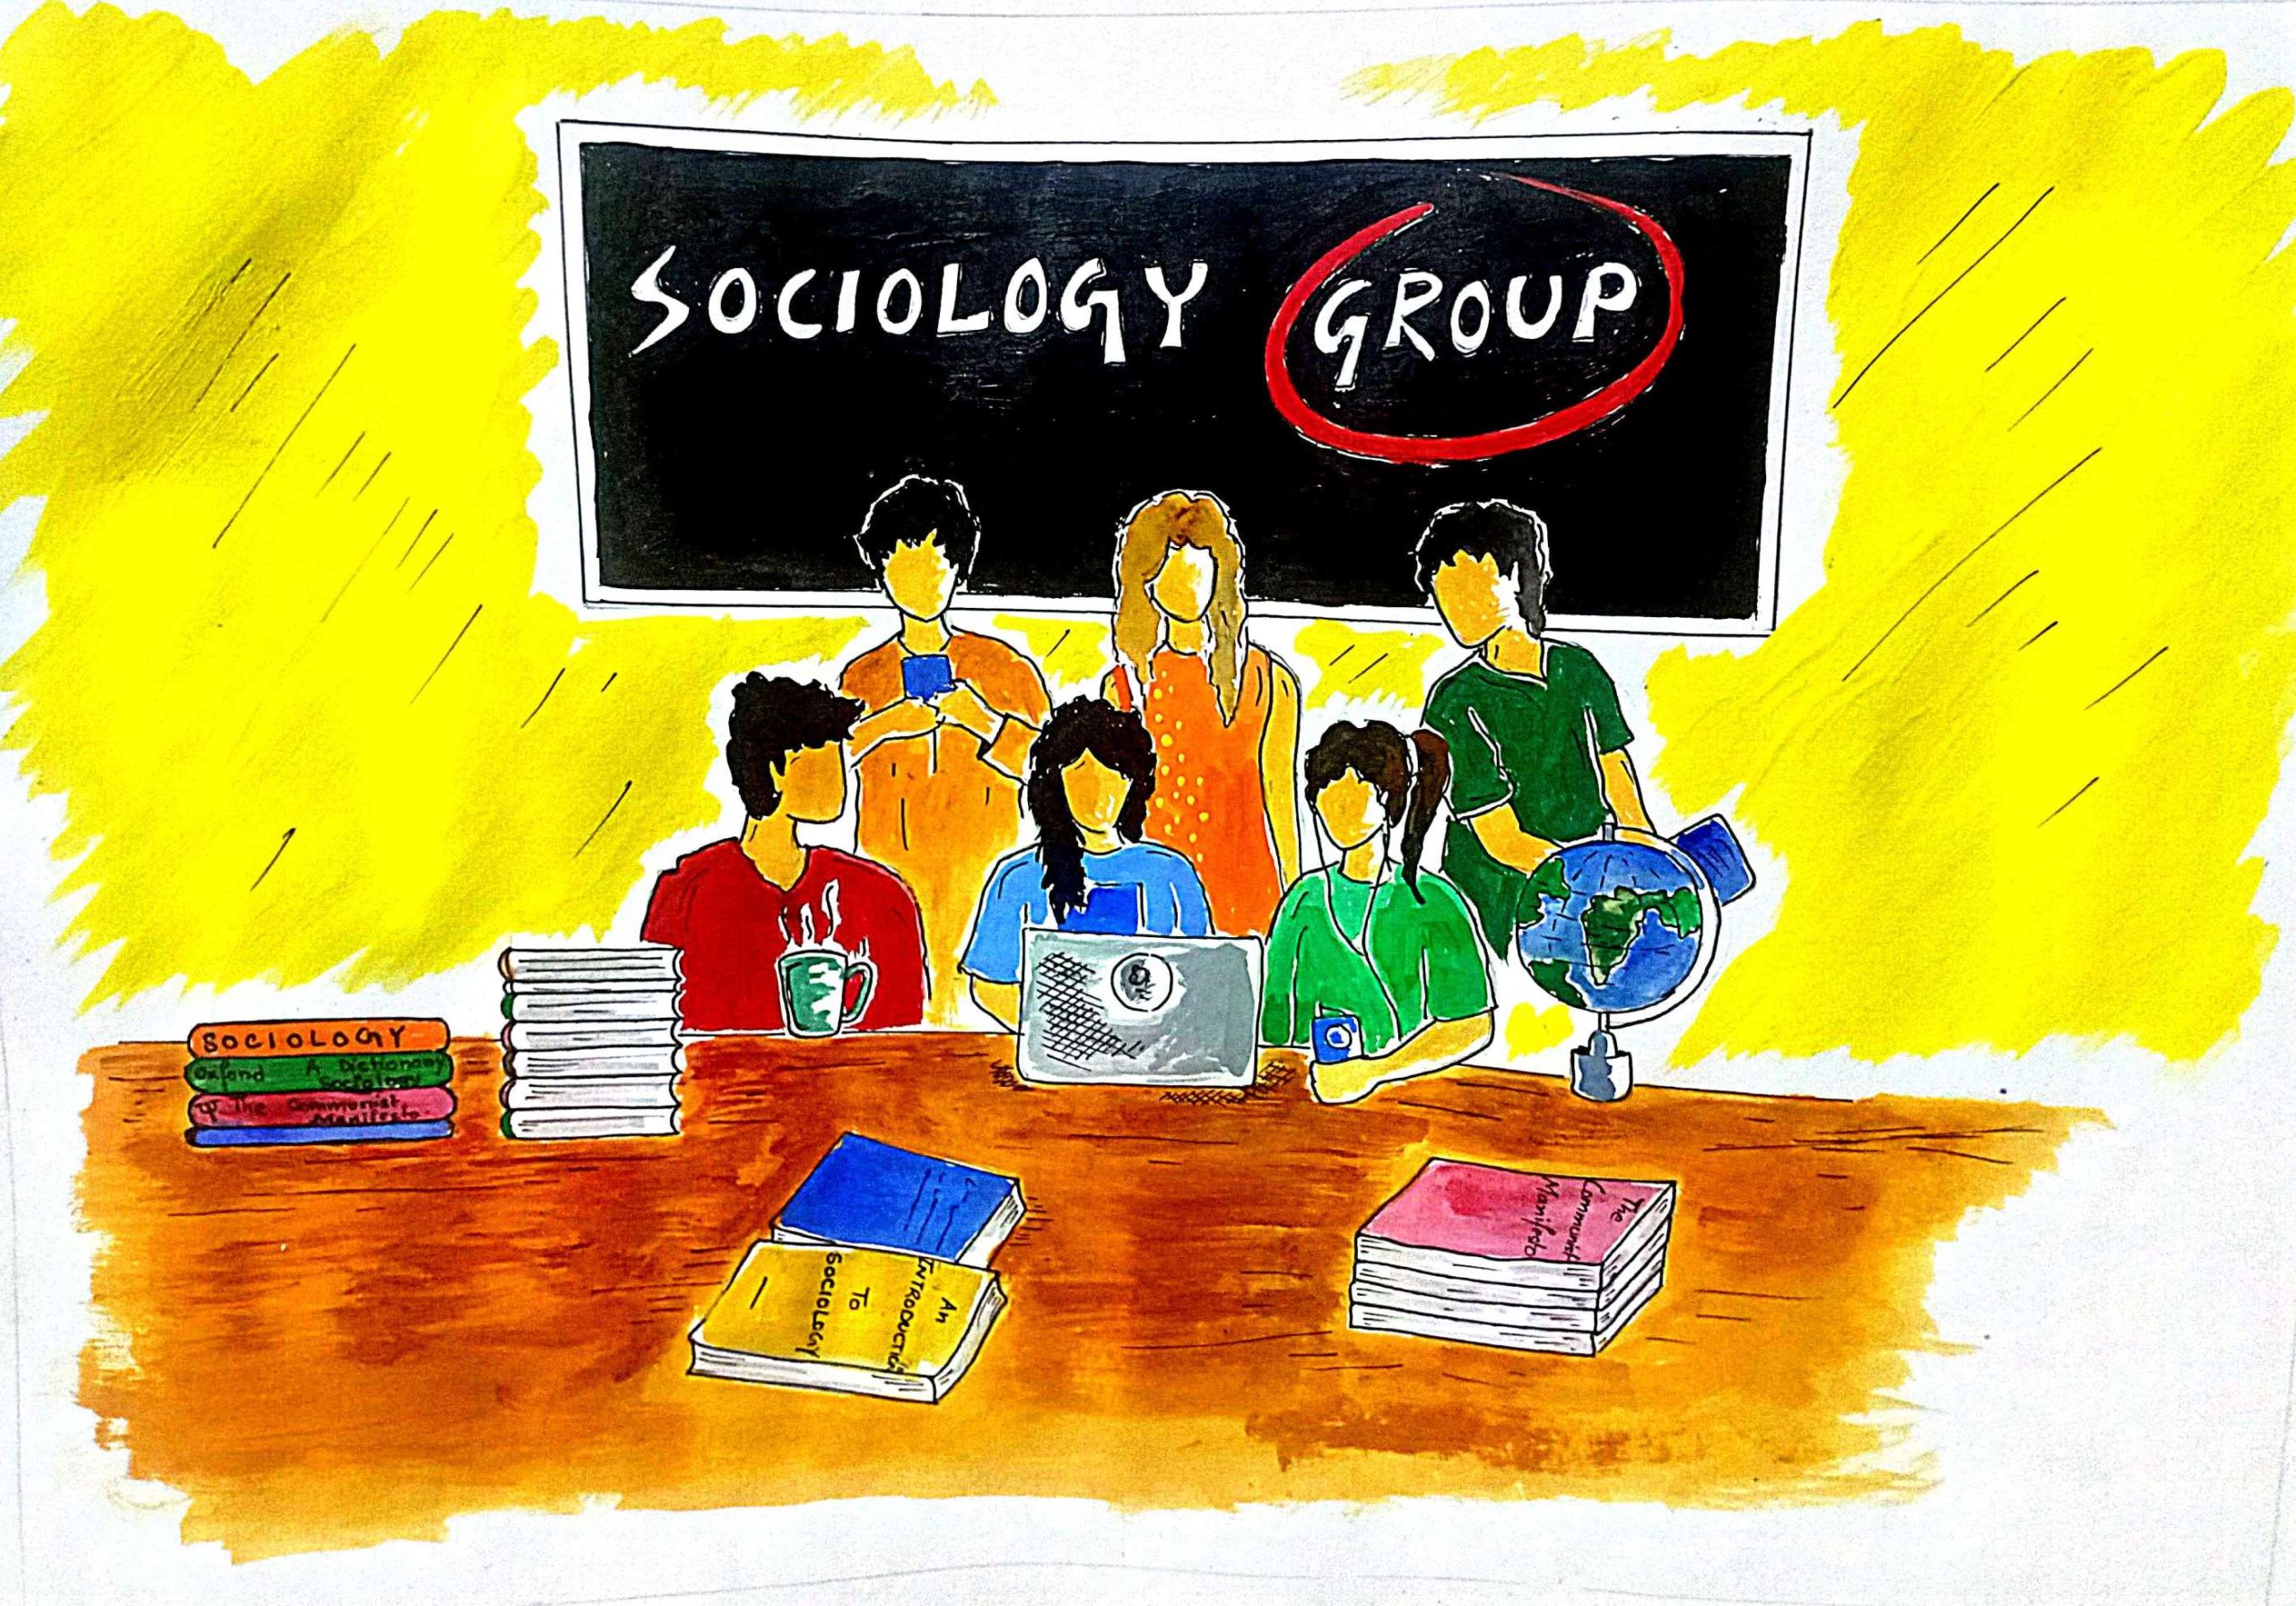 www.sociologygroup.com